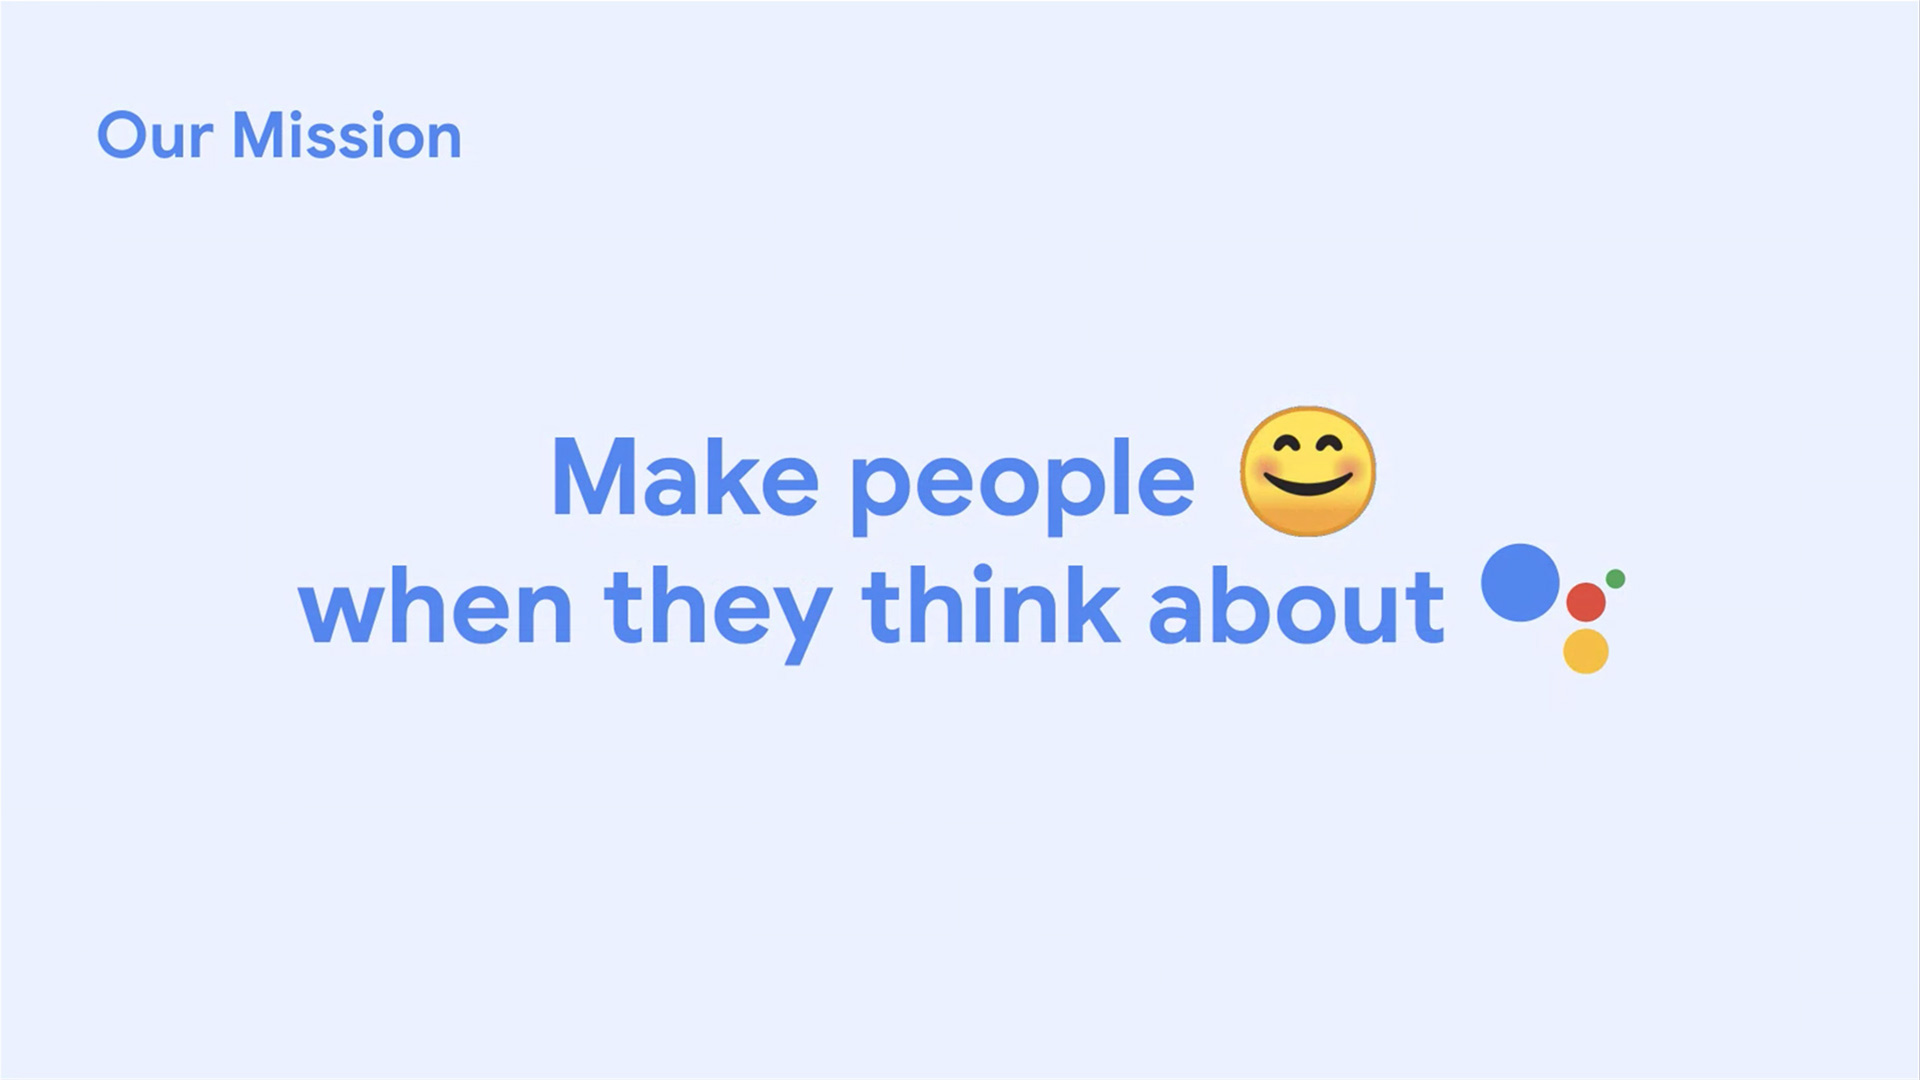 Mission statement: Make people happy